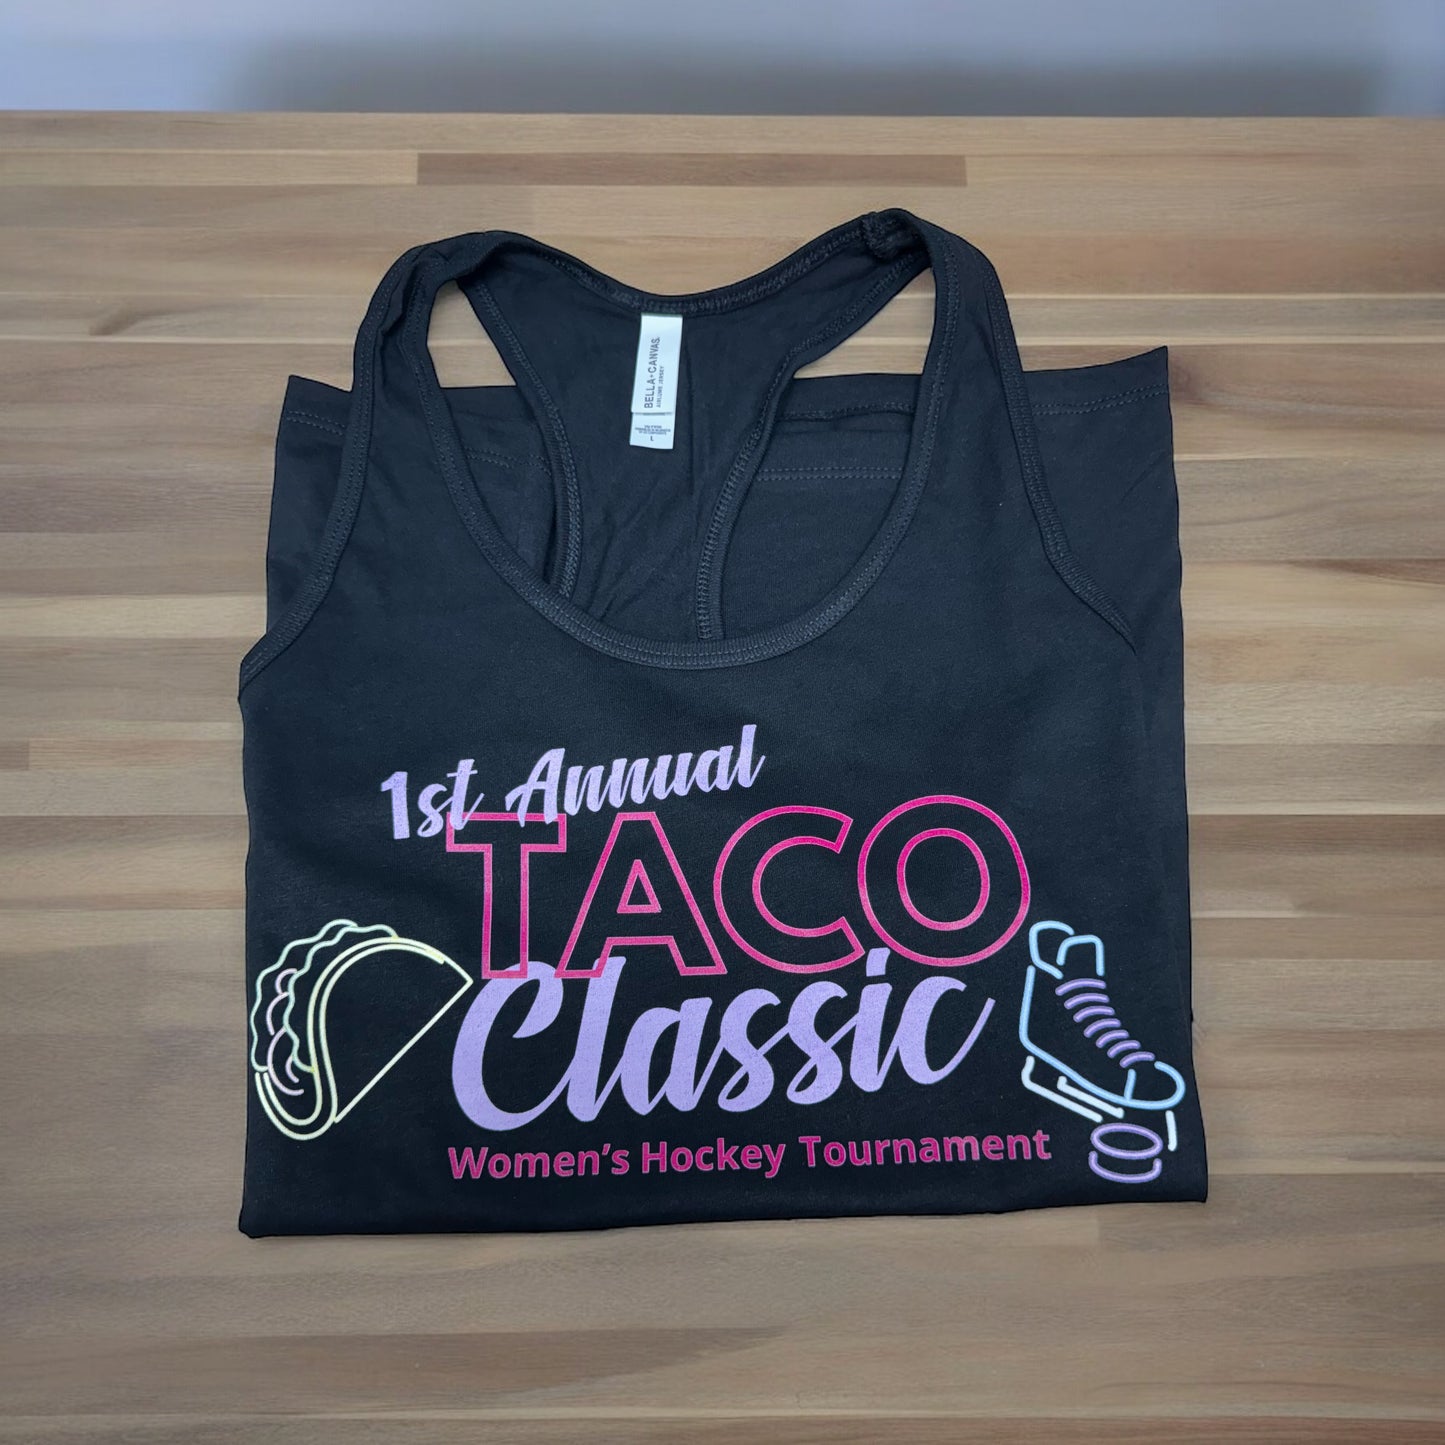 Taco classic Tournament Shirts